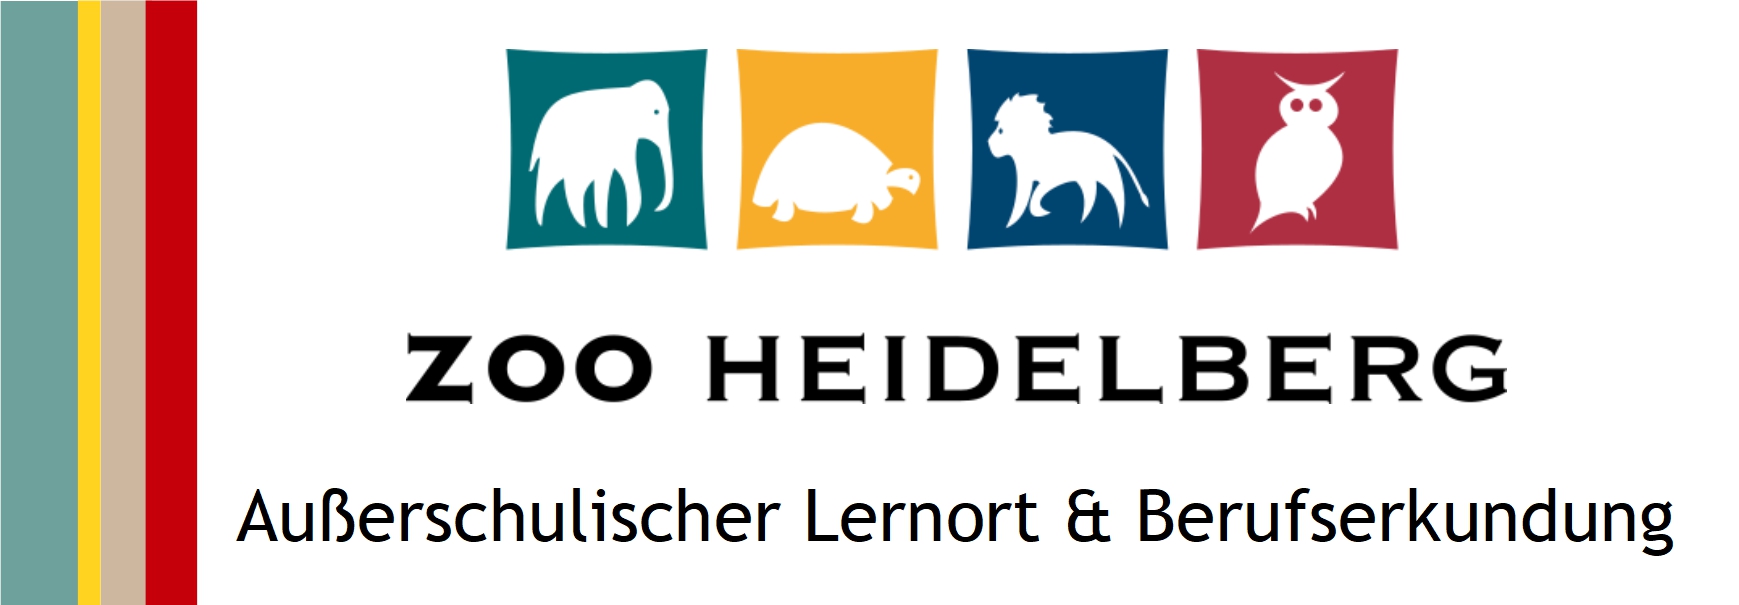 Logo des Heidelberger Zoos